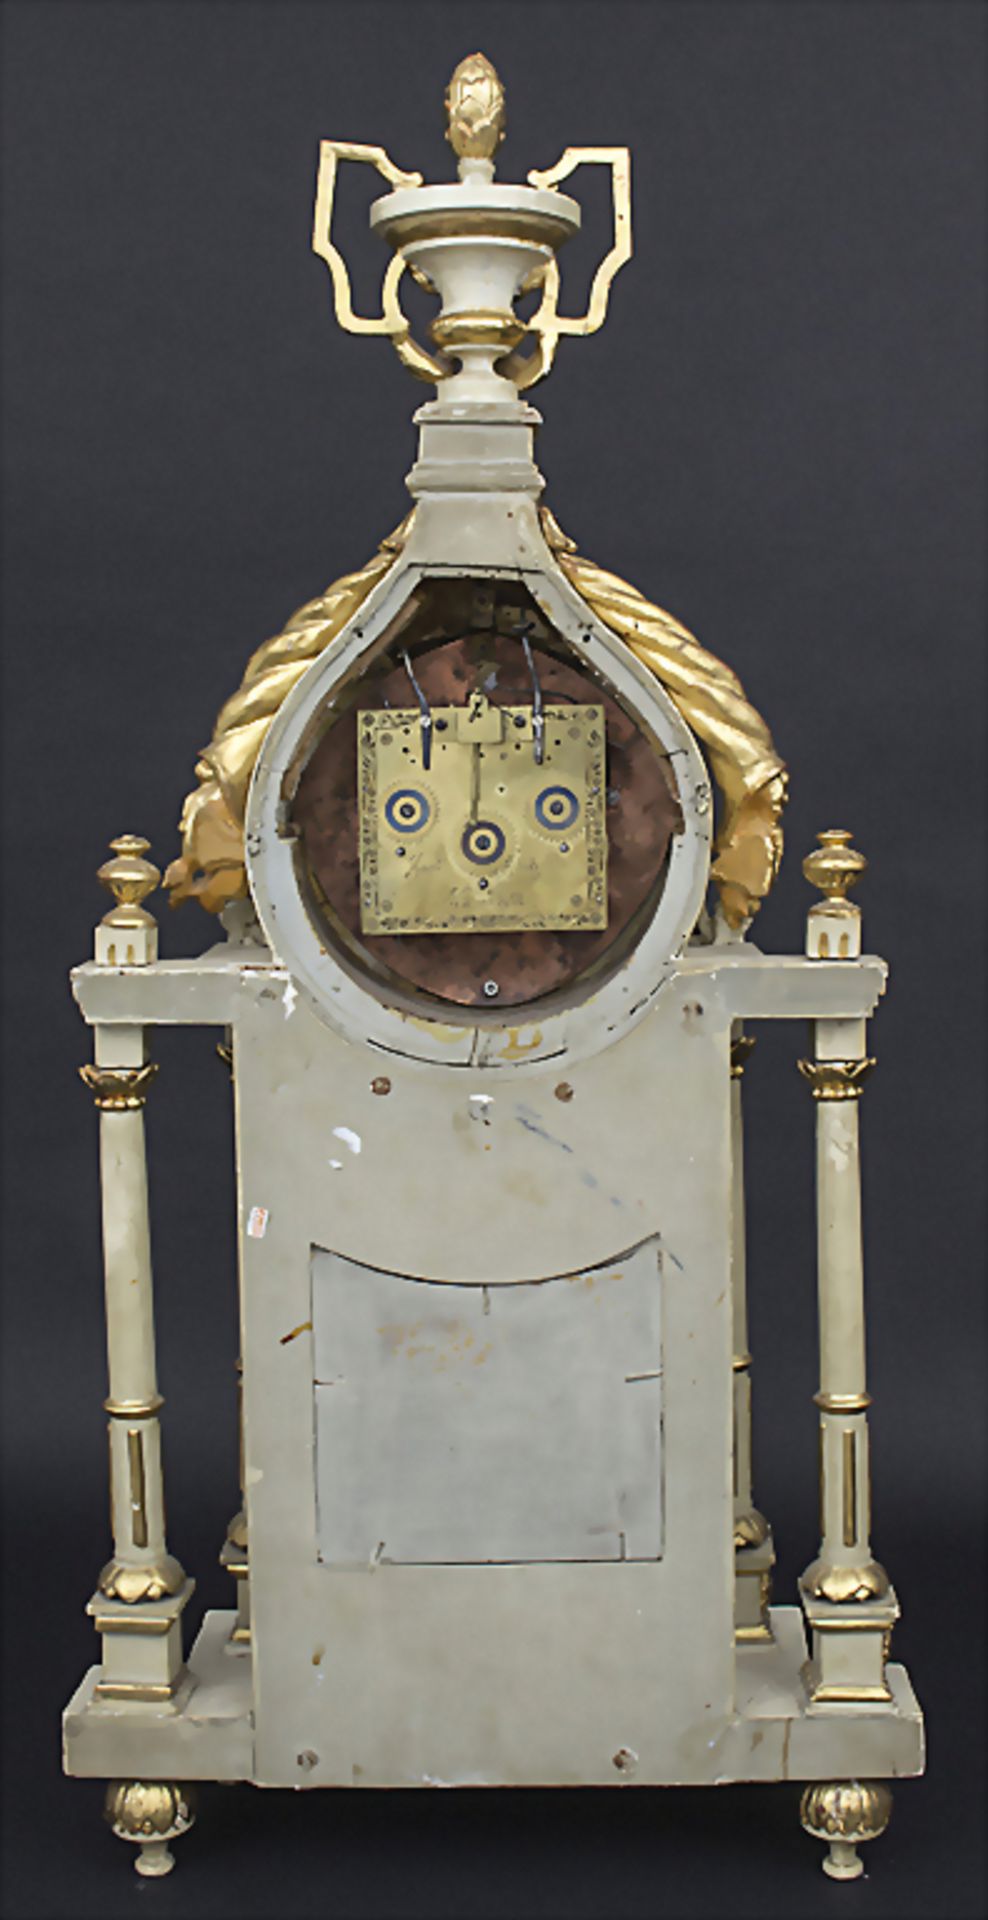 Louis-Seize-Kaminuhr / Louis-Seize mantle Clock, Jocob Scholz, Neumarkt, um 1775Holzge - Image 3 of 4